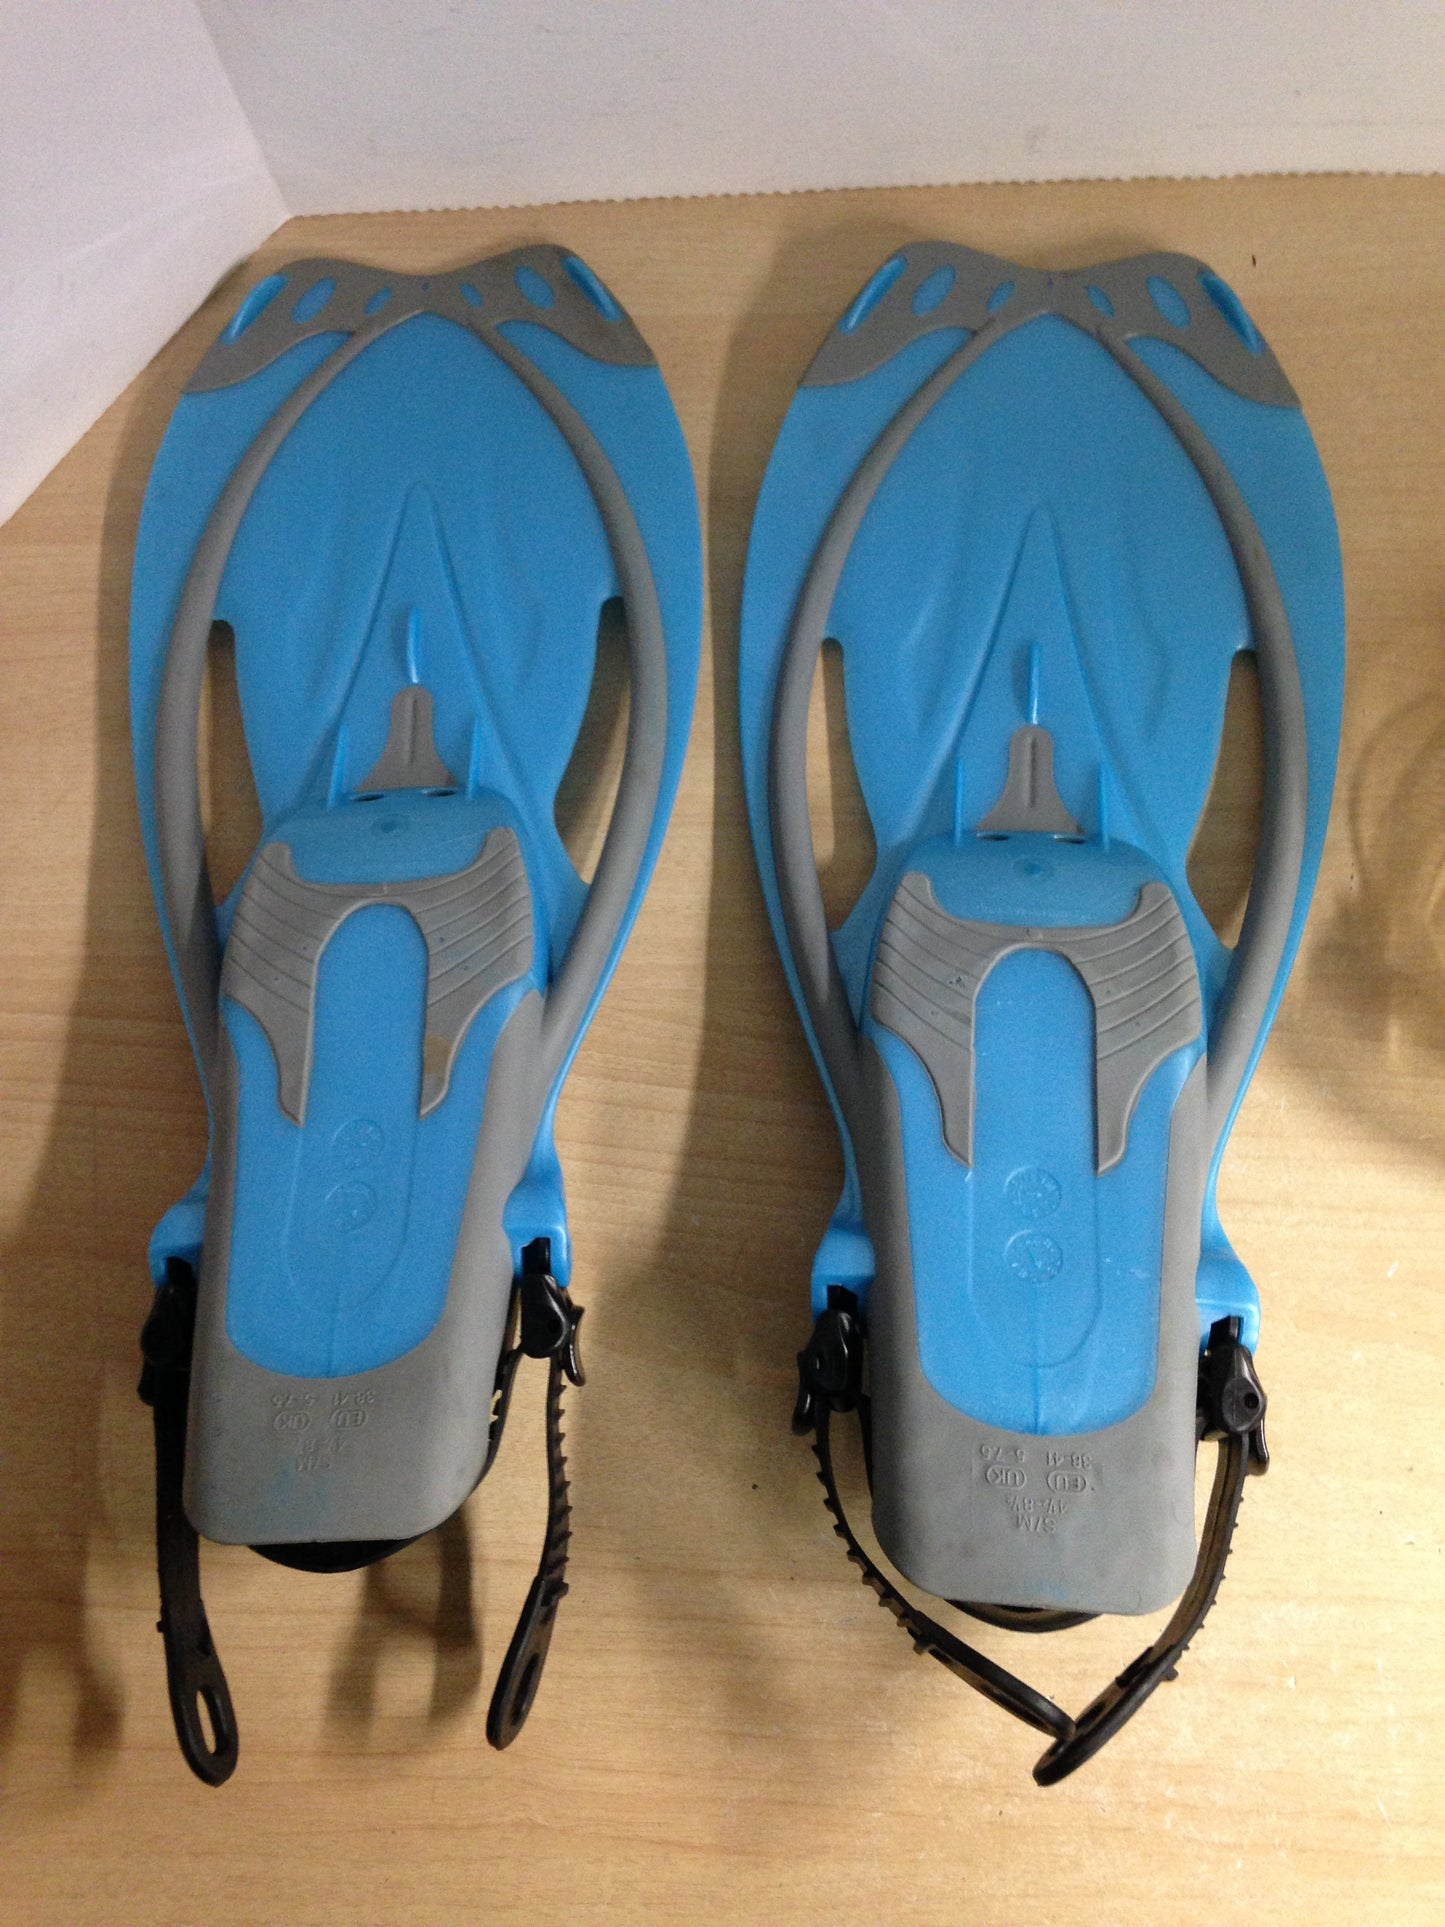 Snorkel Dive Fins Set Ladies Shoe Size 4.5-8.5 Youth Body Glove Blue Grey Excellent